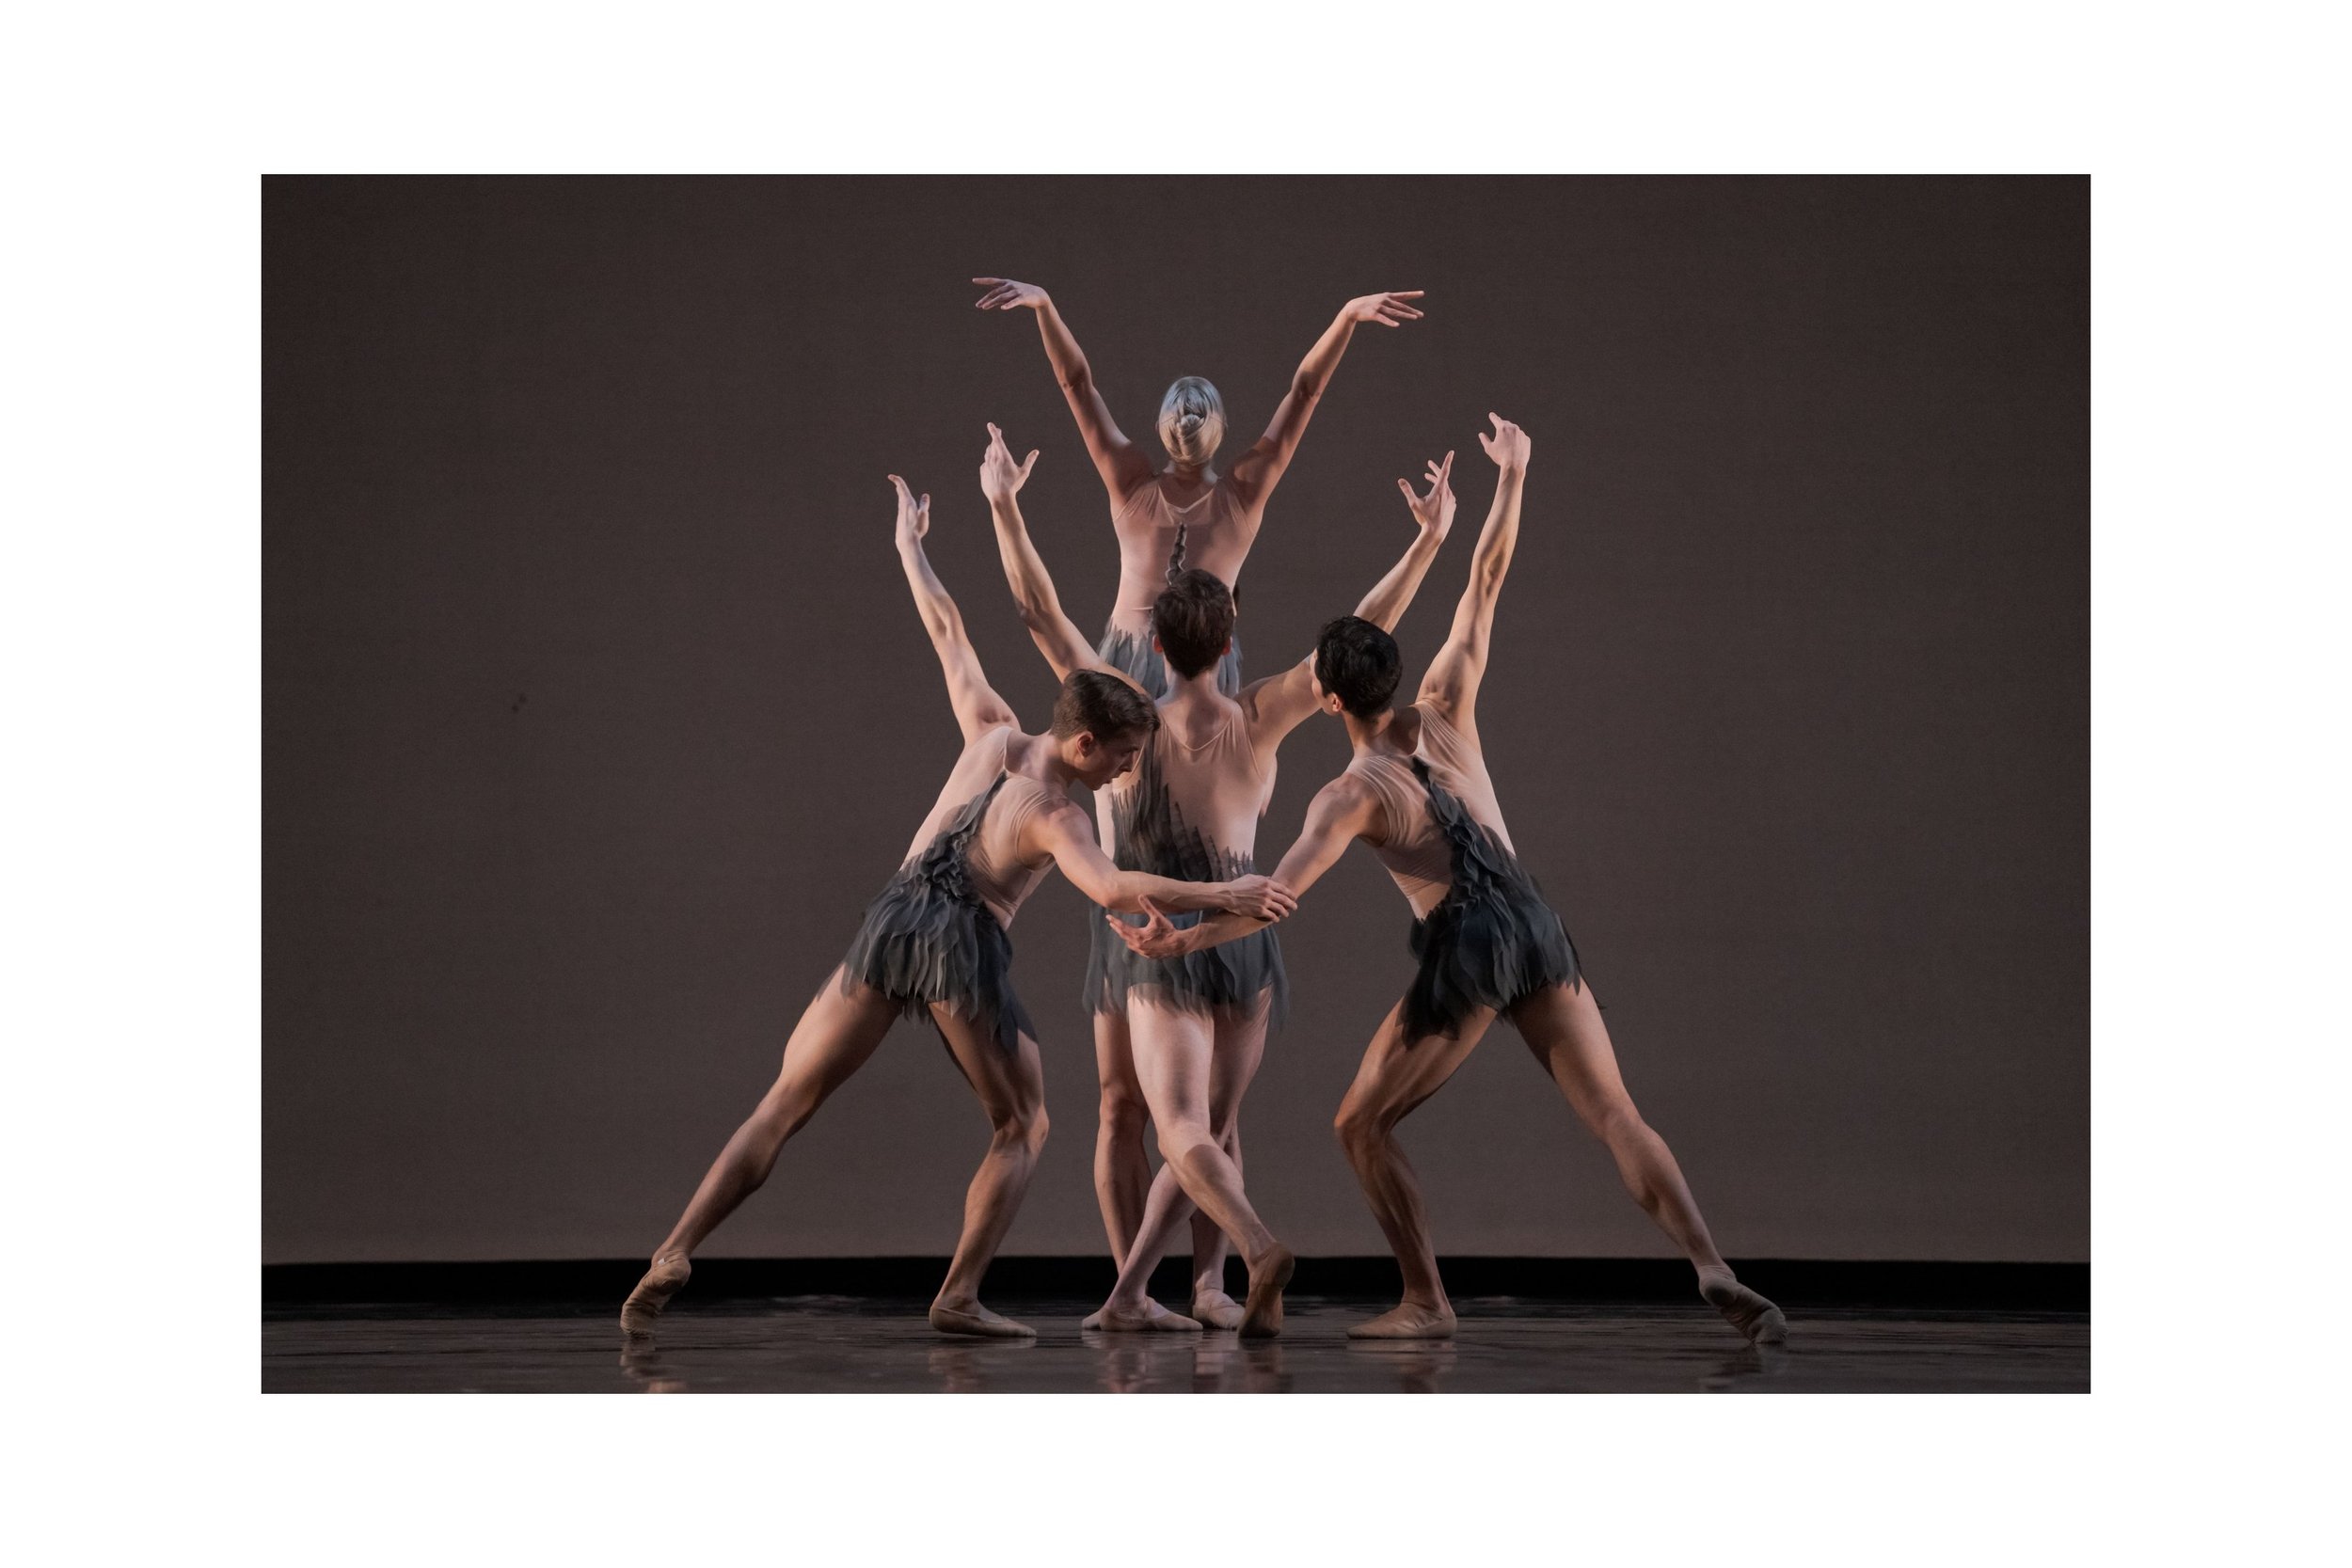  Artists of the Ballet in Skyward. Photo by Karolina Kuras, courtesy of The National Ballet of Canada. 